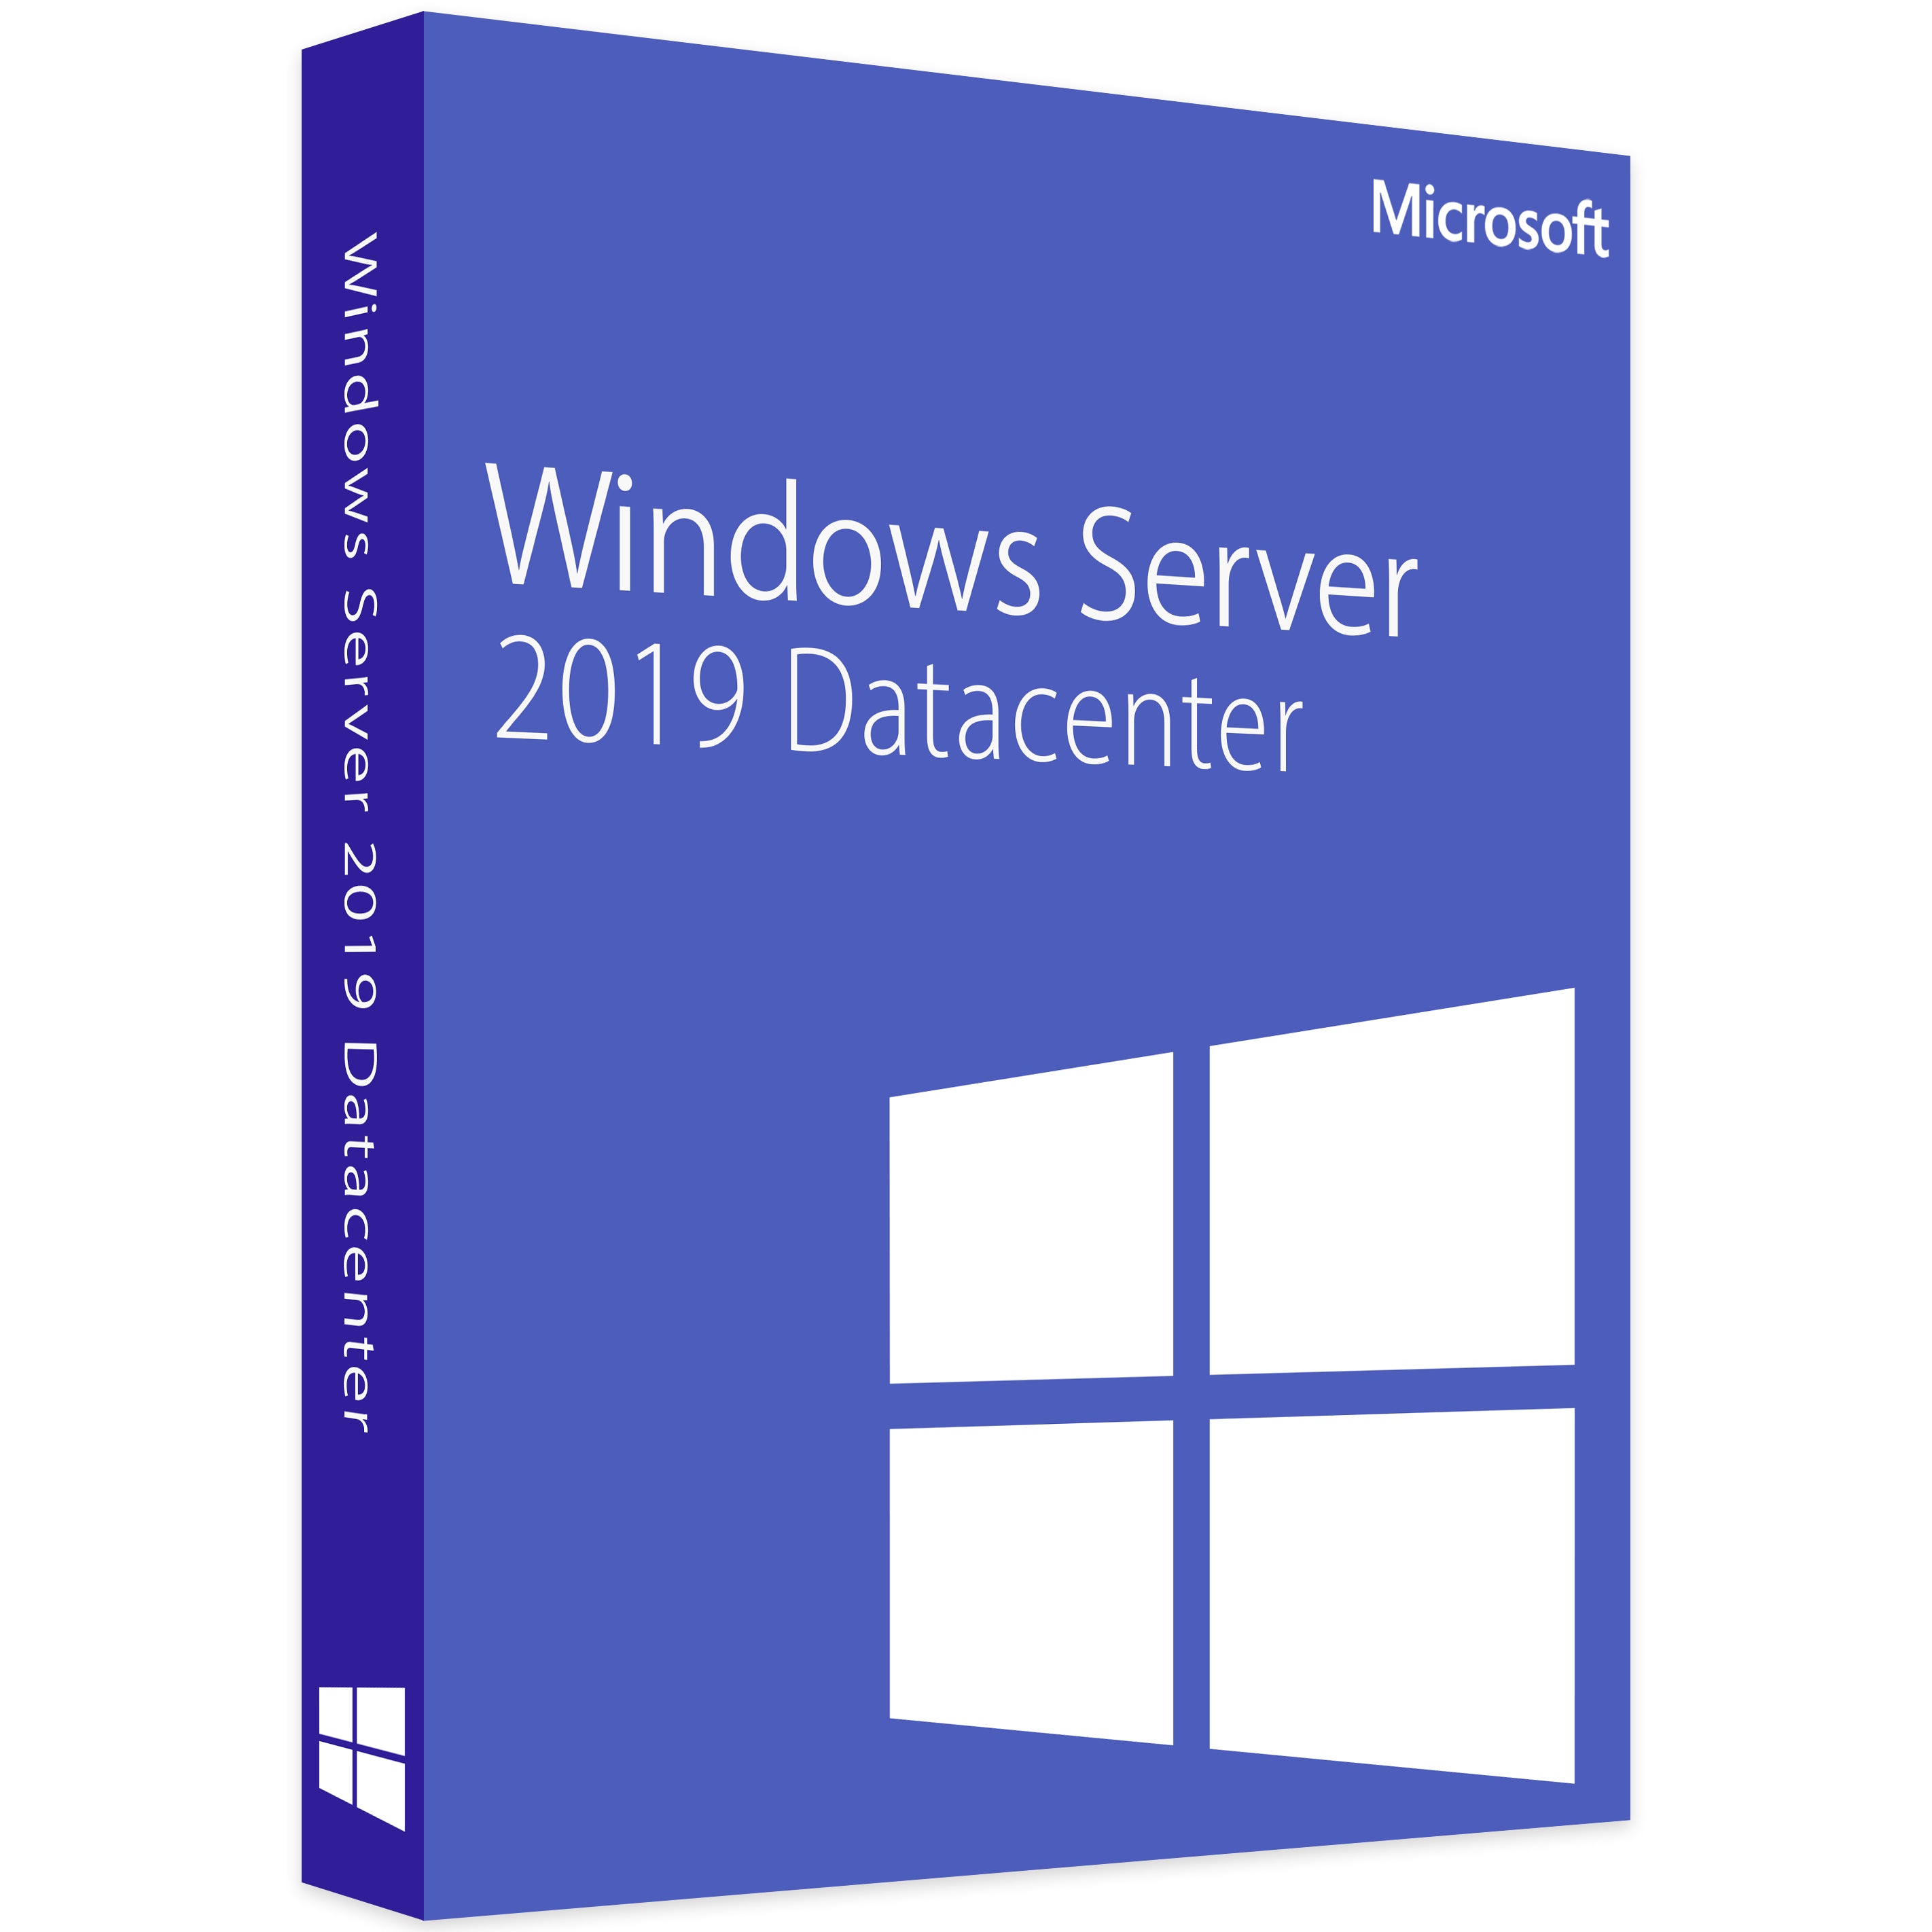 Microsoft Windows Server 2019 Datacenter - Lifetime license 1PC